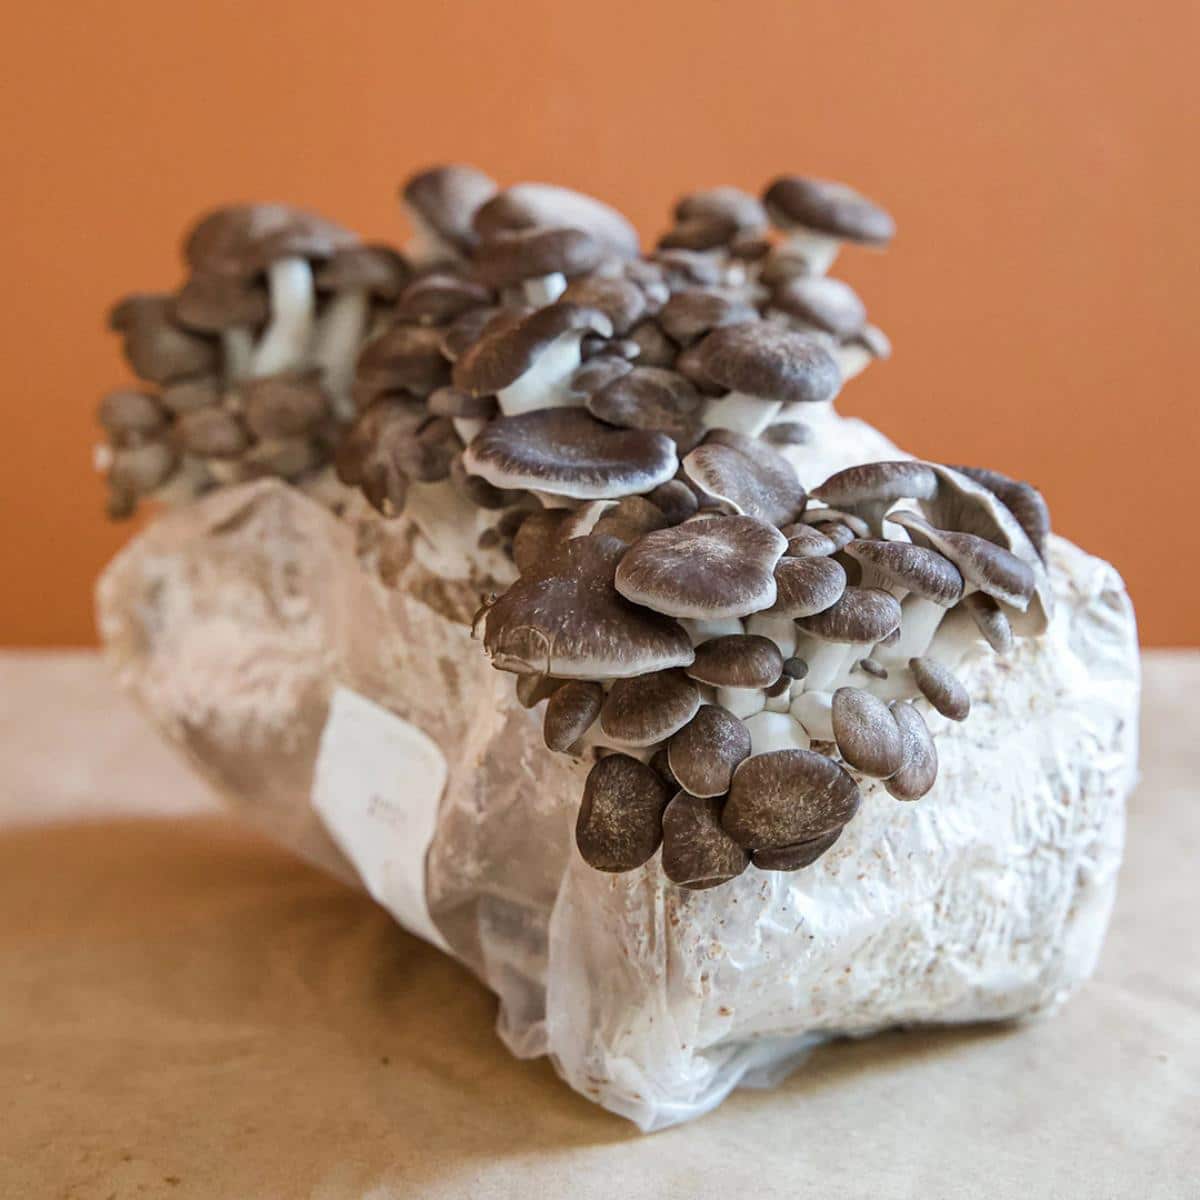 Cascadia Farms Oyster Mushroom kit